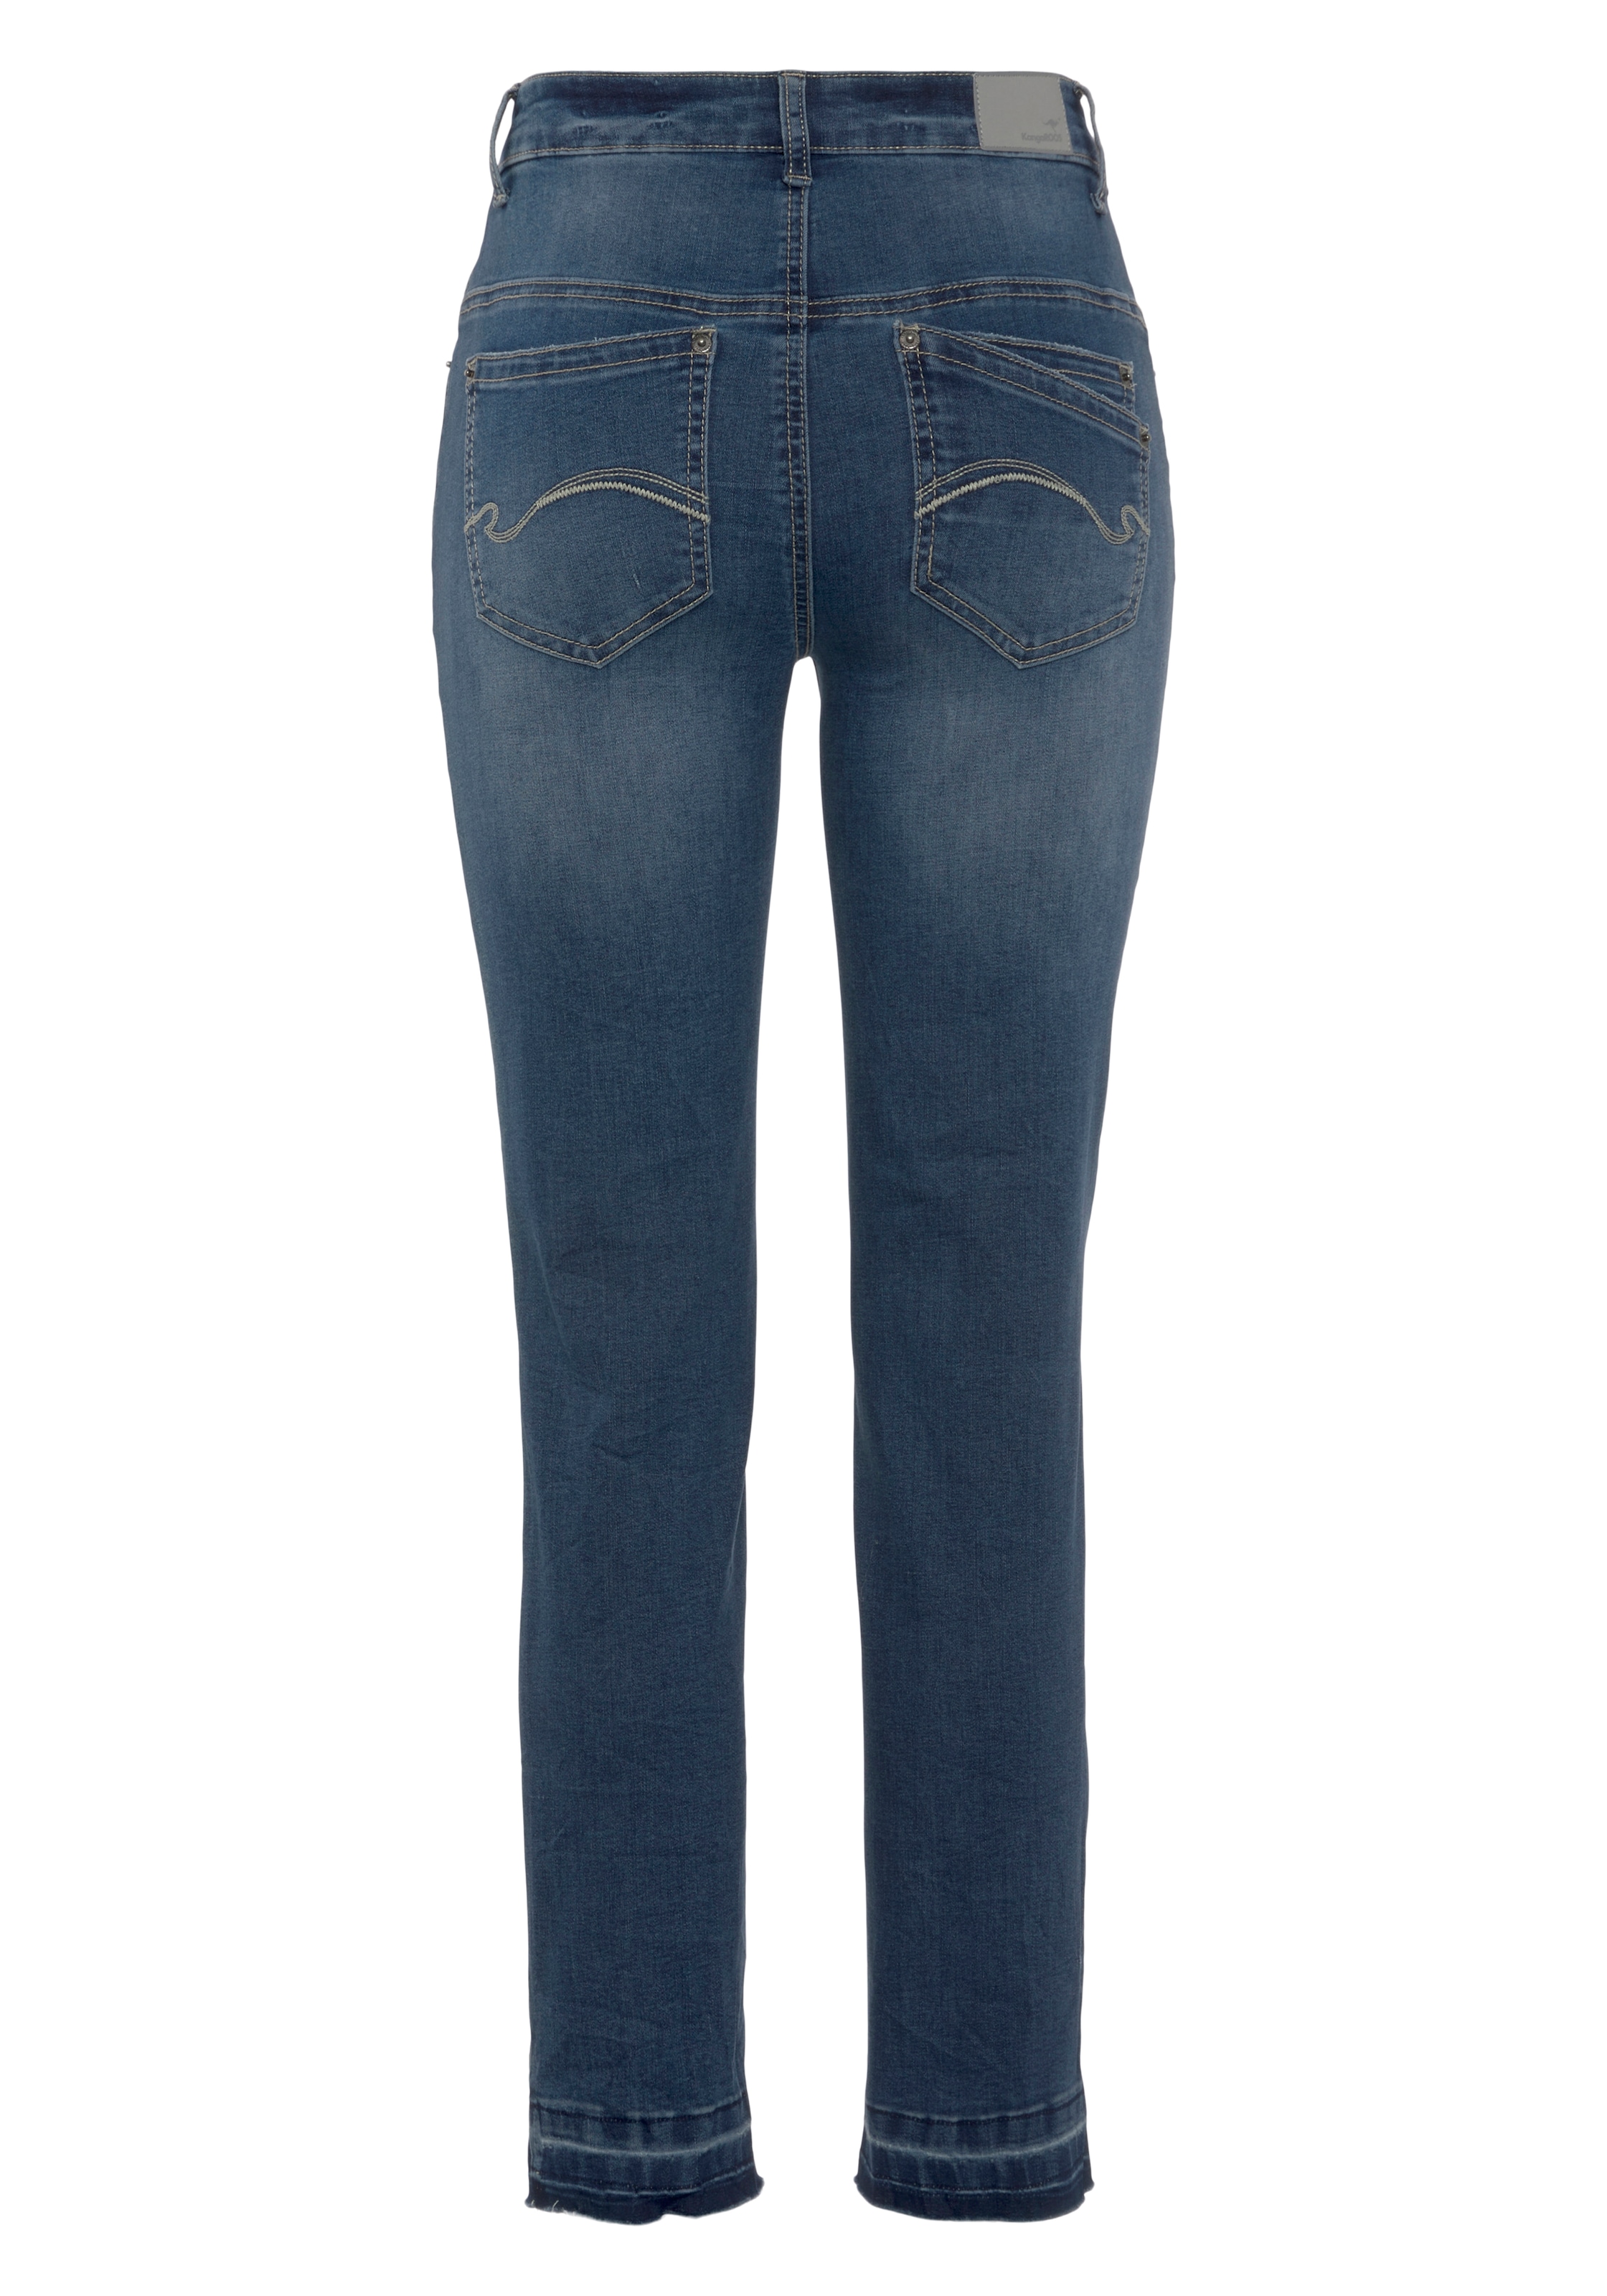 KangaROOS 7/8-Jeans »CULOTTE-JEANS«, mit ausgefranstem - Saum NEUE KOLLEKTION shoppen